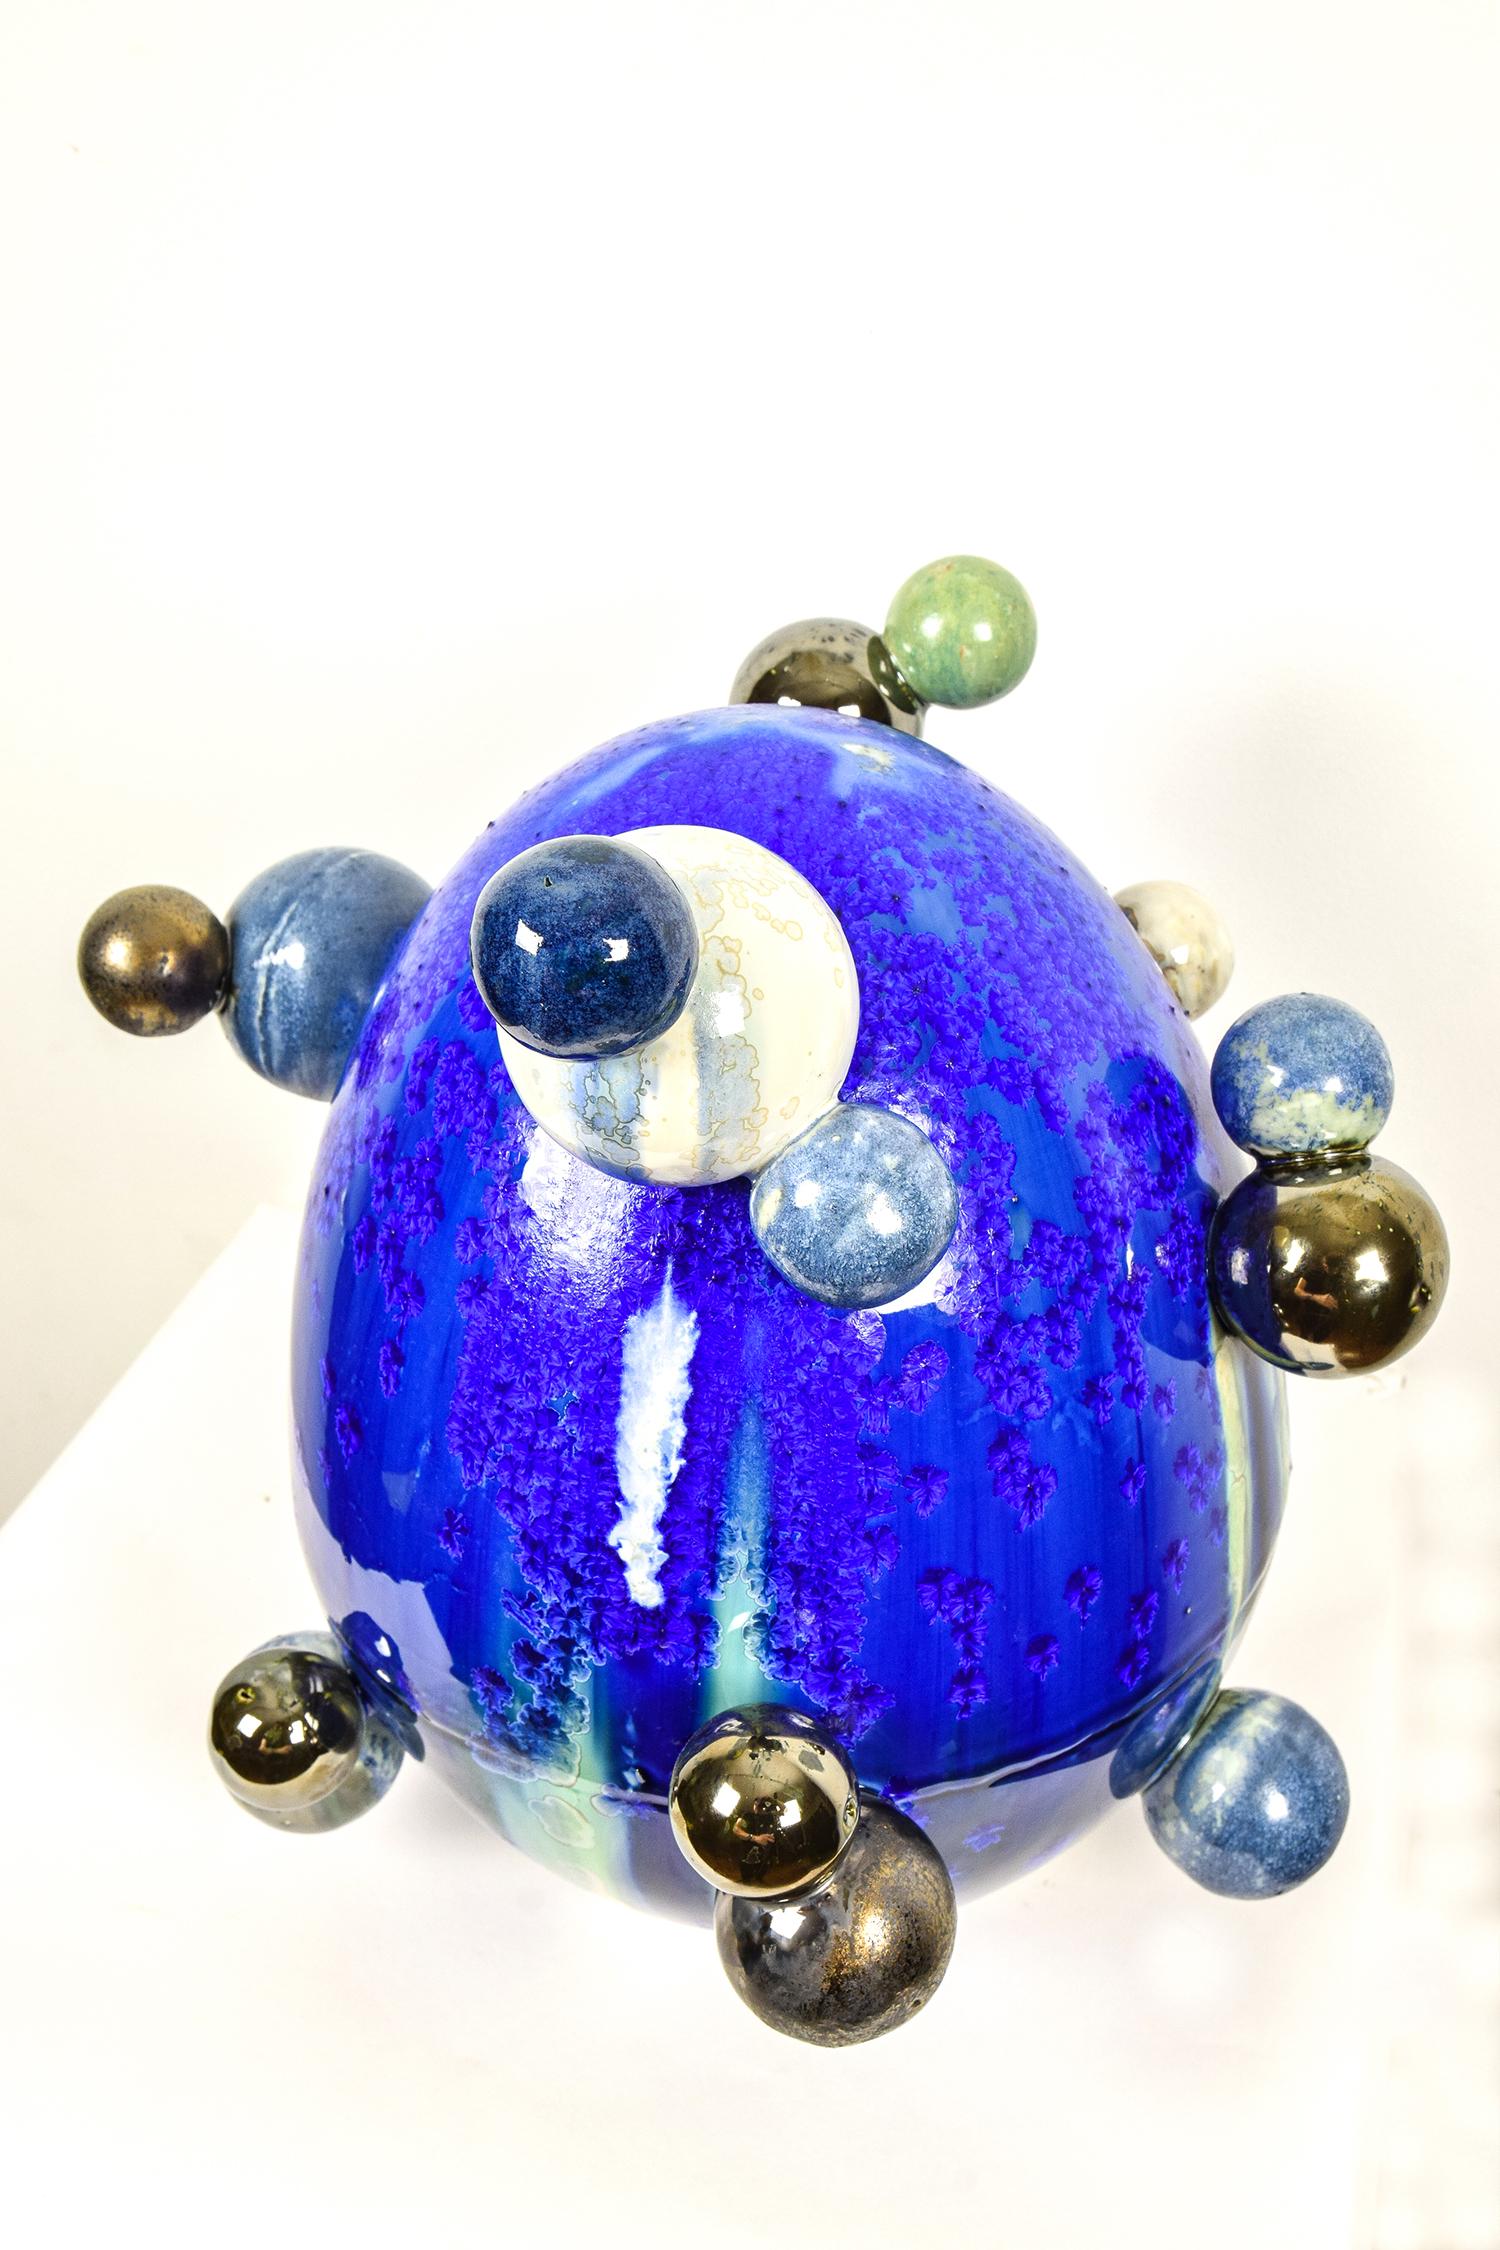 Atomic Egg by NAM TRAN - Unique Hand-Made Sculpture, Blue Egg, Porcelain Art 3